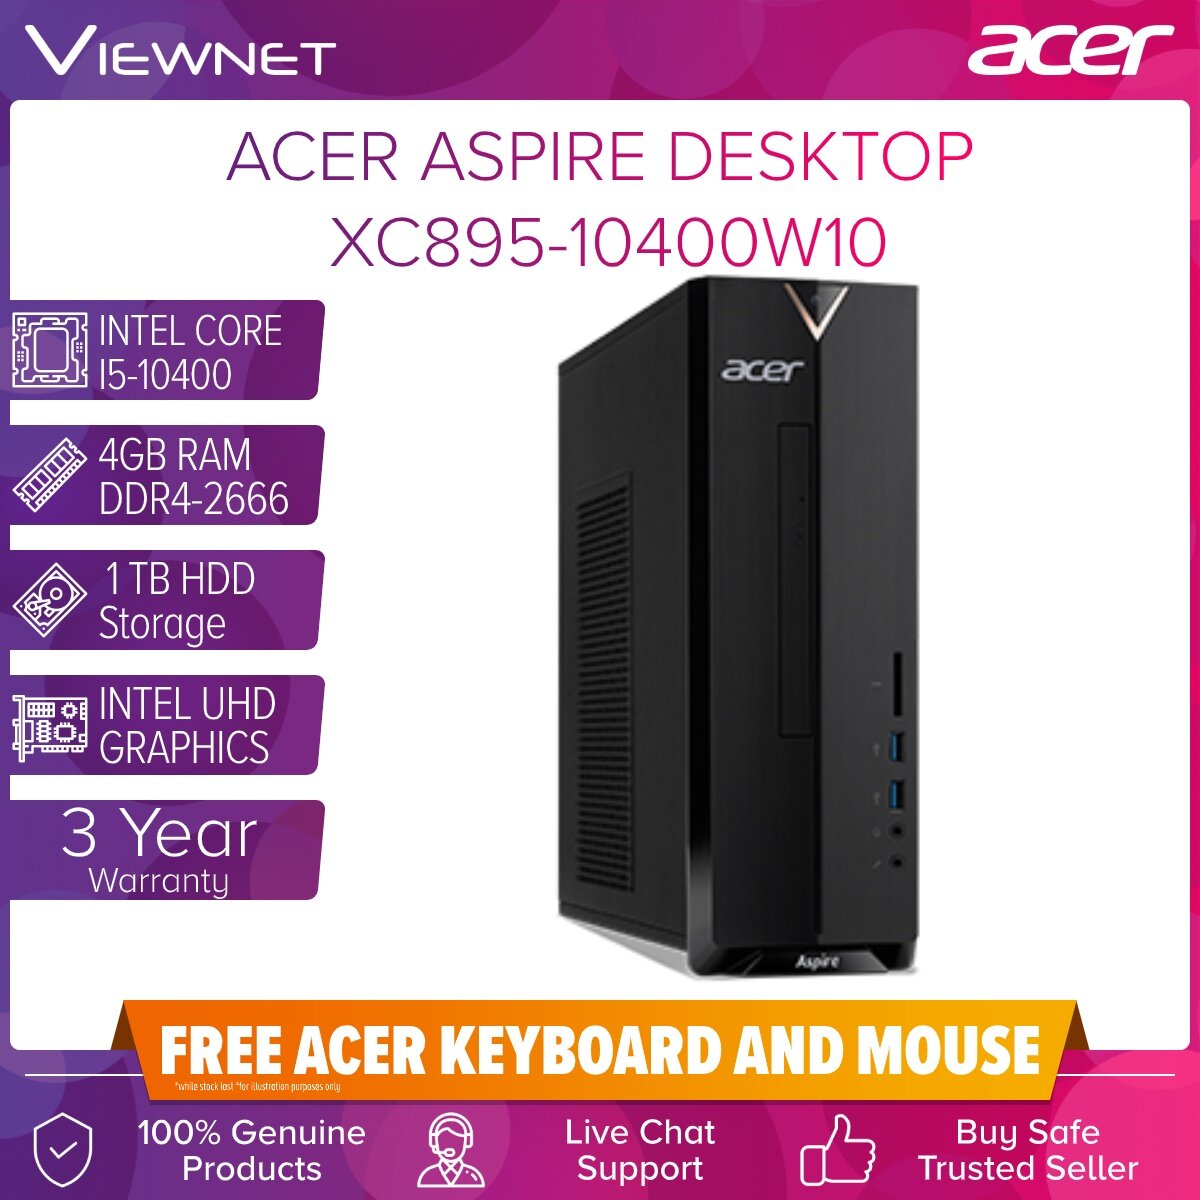 ACER ASPIRE XC895-10400W10 DESKTOP INTEL CORE I5-10400 4GB DDR4 2666 1TB HDD DVDRW INTEL UHD WIRELESS KB+MSE (DT.BEWSM.003) 3 YEARS ON-SITE WARRANTY